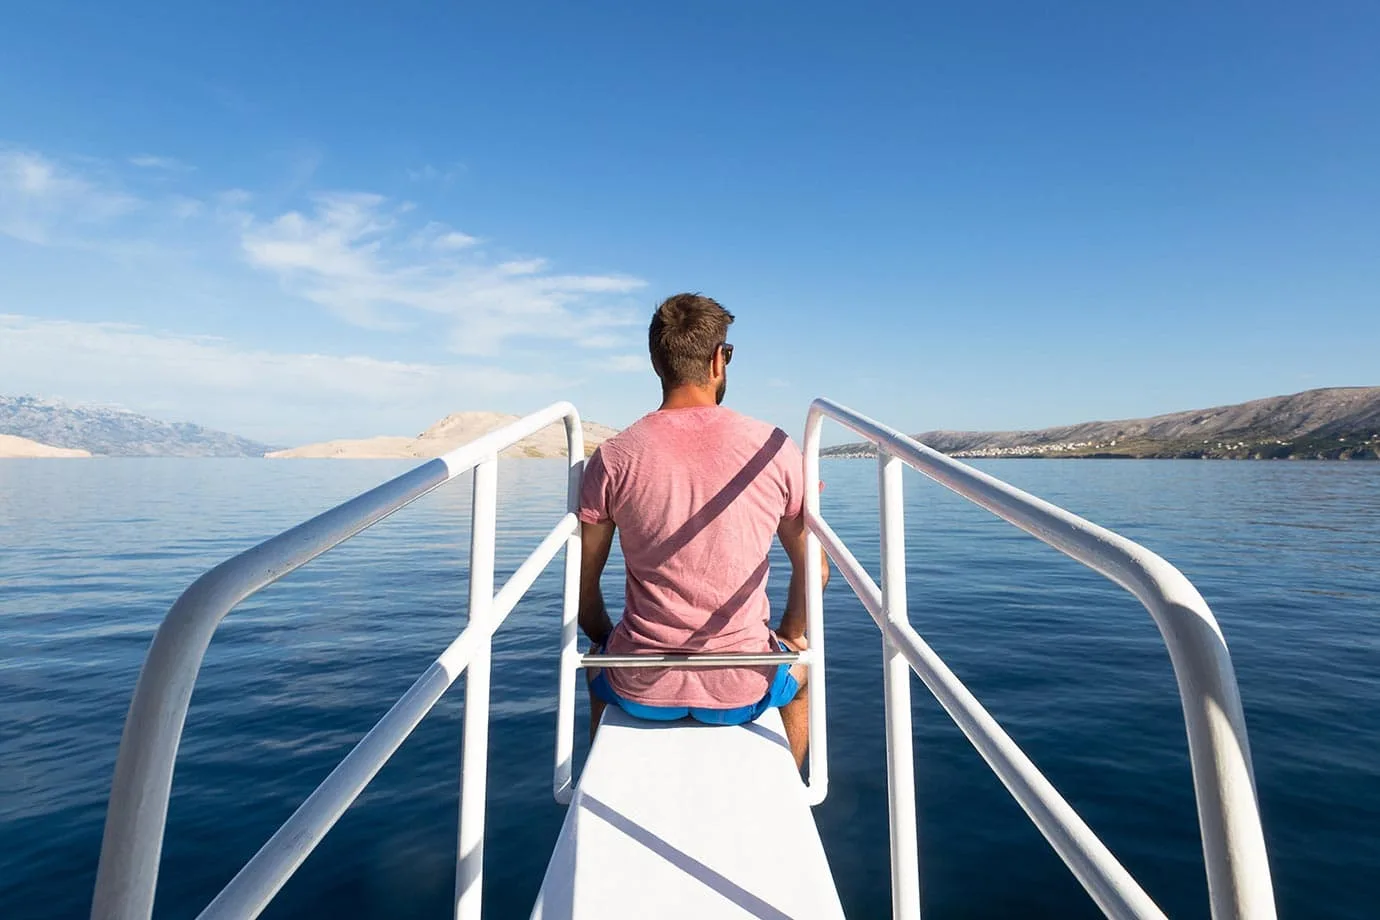 Sitting on a boat in Croatia